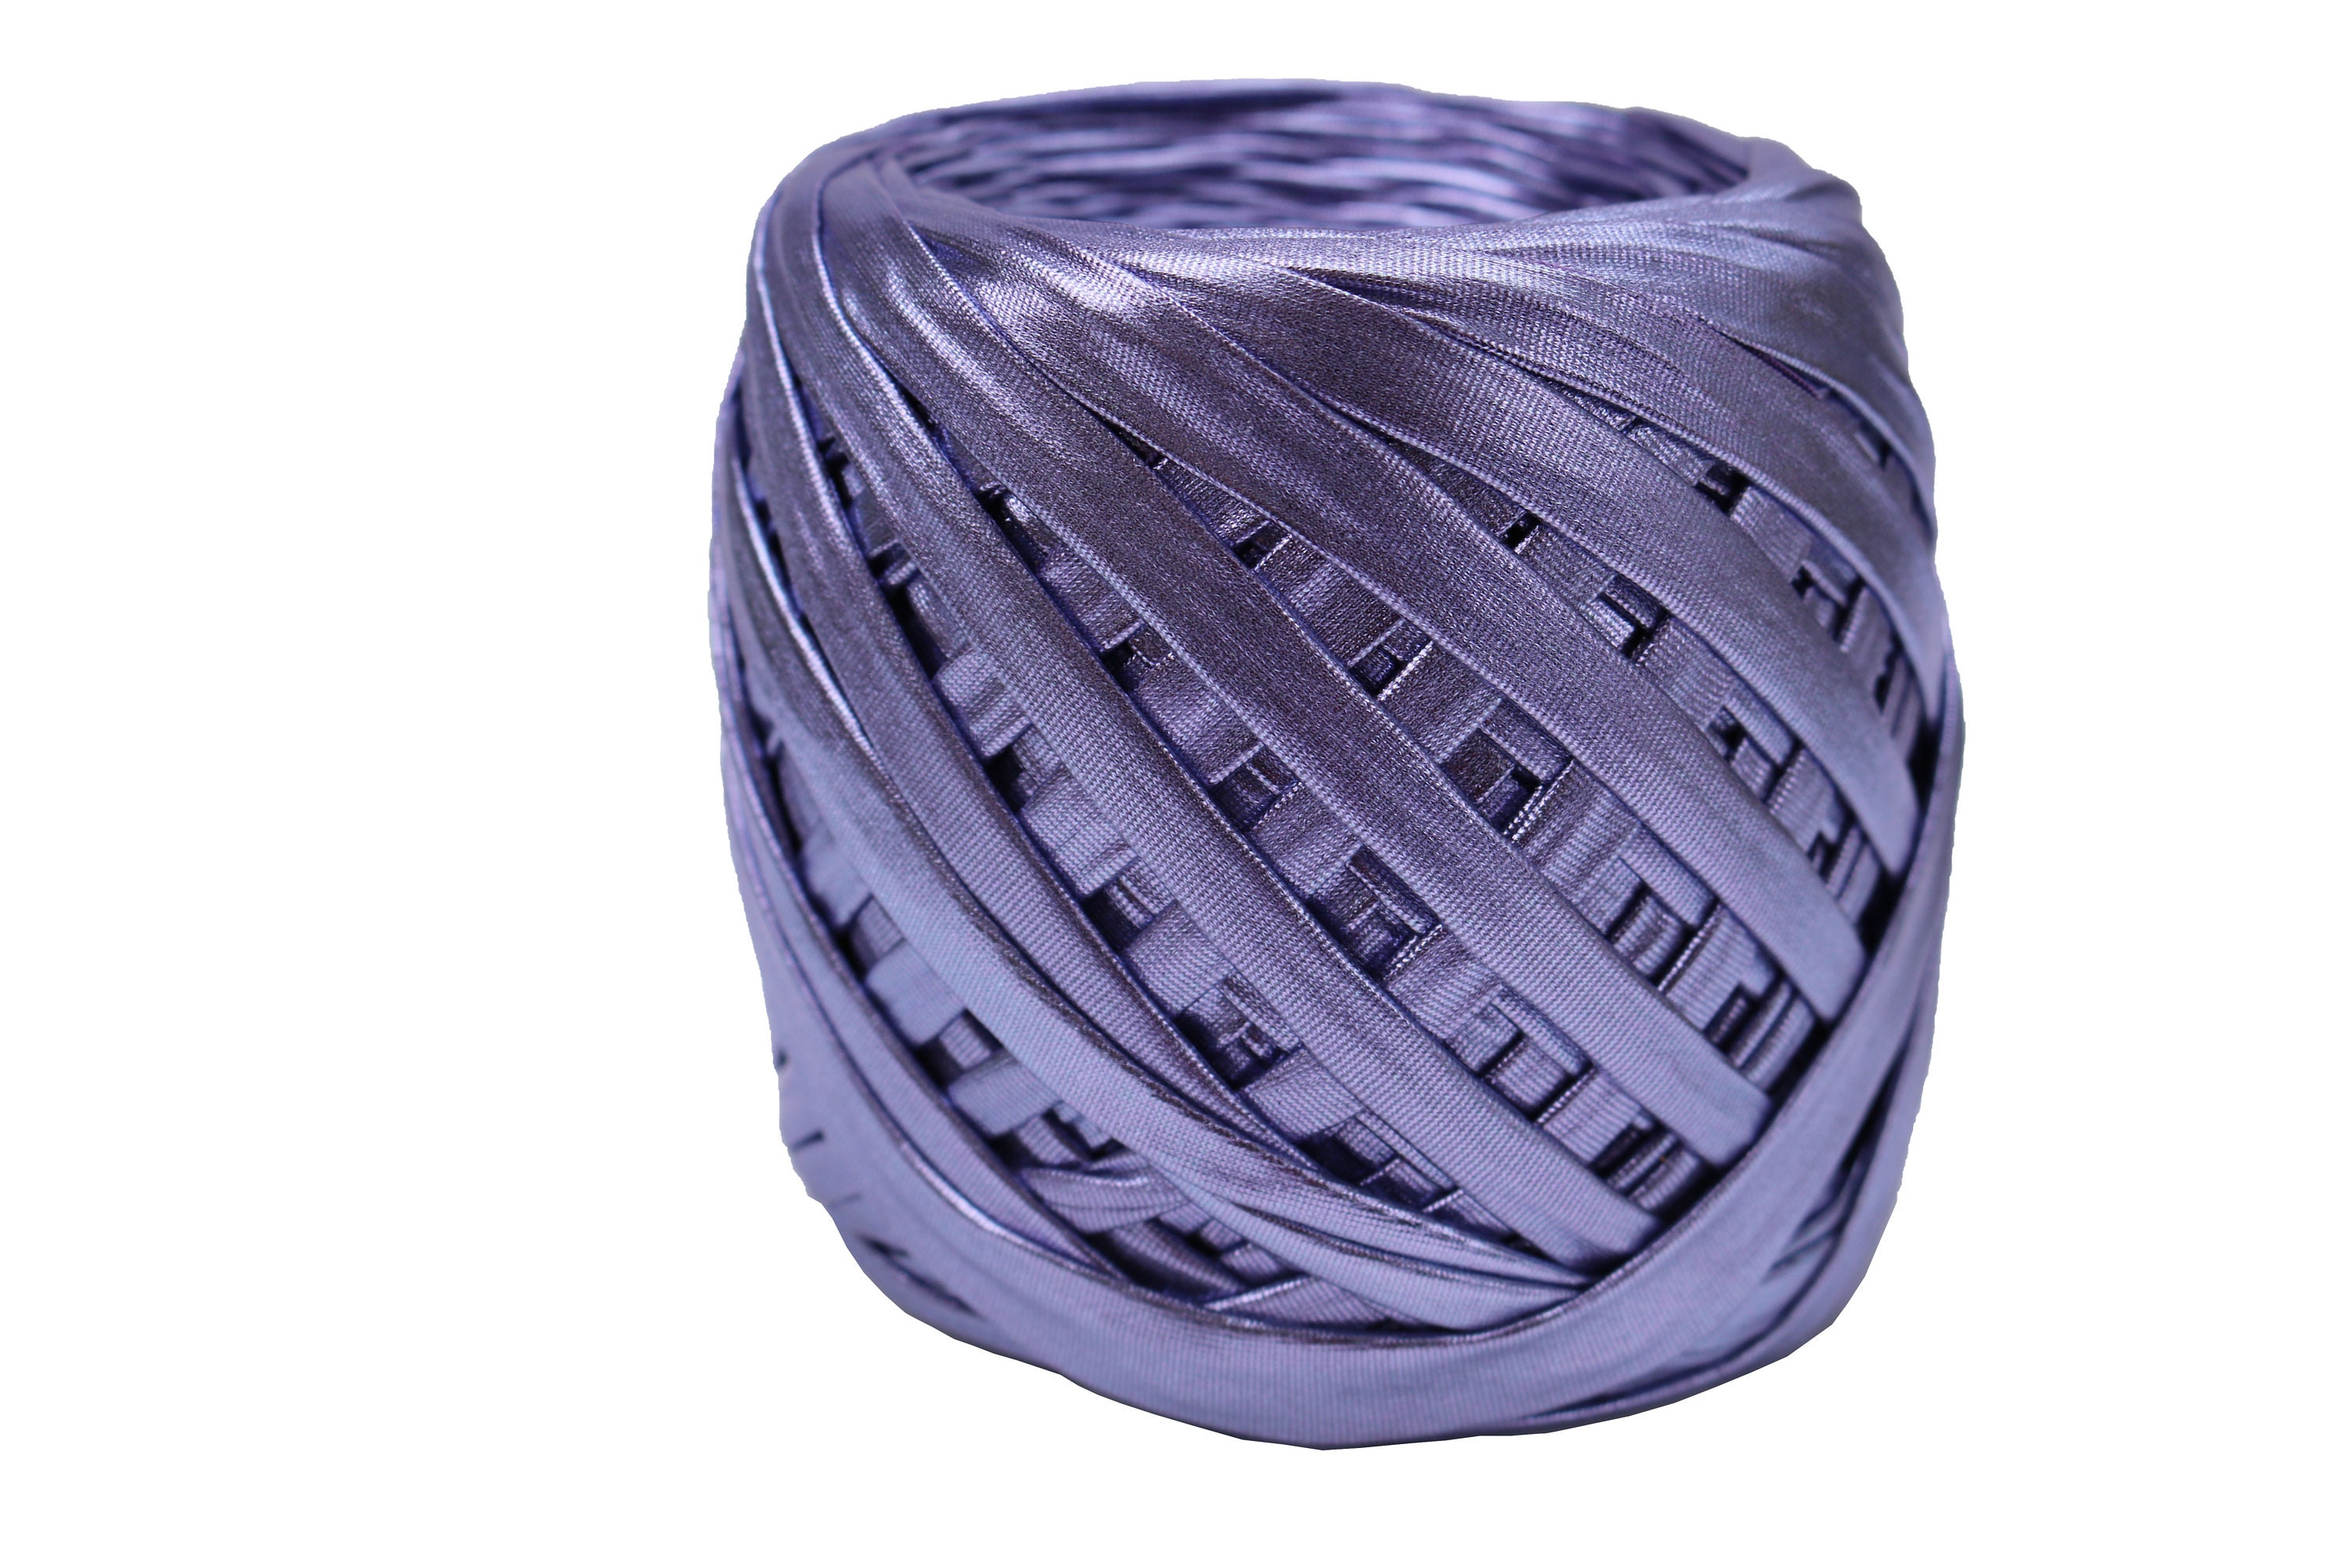  Metallic T-Shirt Yarn 140 Yards Knitting Yarn Fabric Crochet  Cloth Shiny Tshirt Yarn for Crocheting Beginners DIY Hand Craft Bag Blanket  Cushion Projects (Blue)